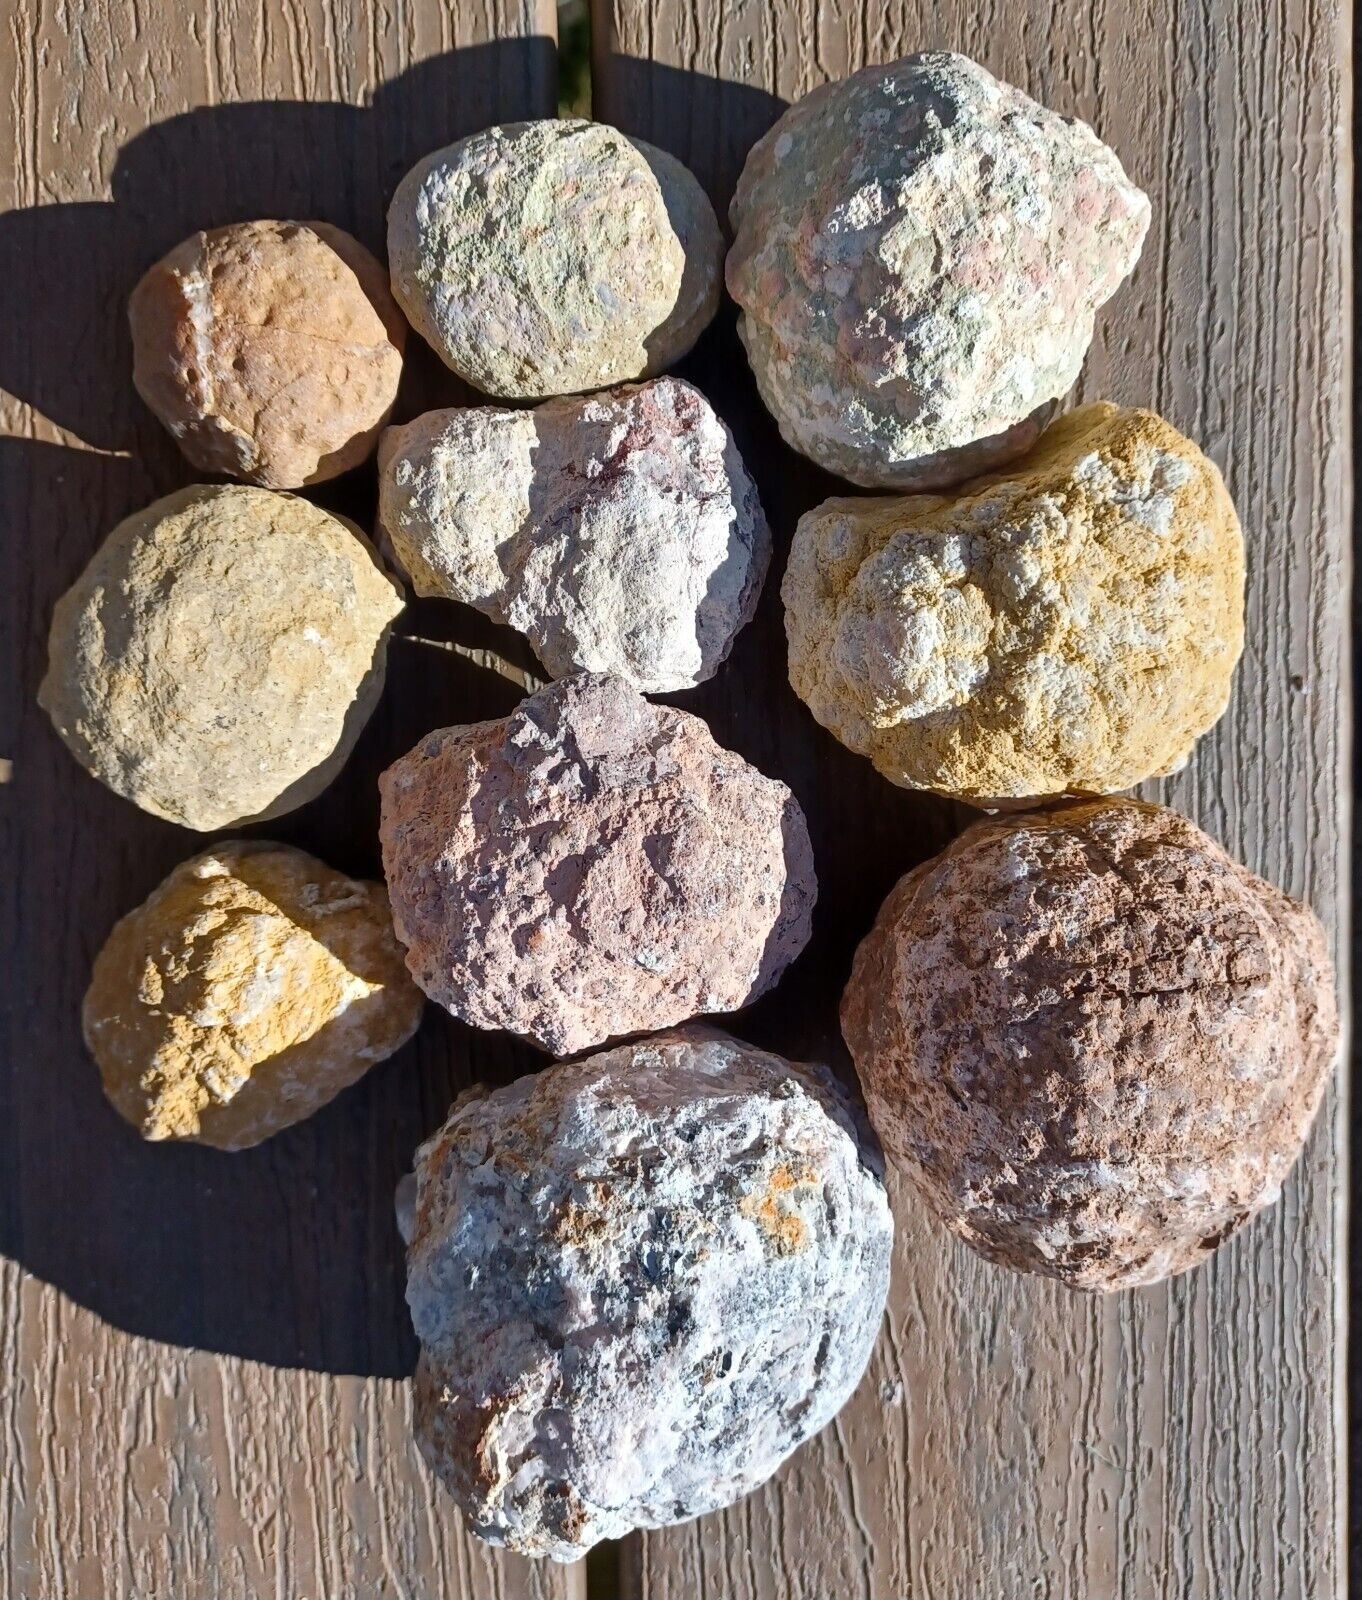 Geode Break Your Own Sampler Pack: 10 Unique Varieties – Coconut, Occo, Trancas